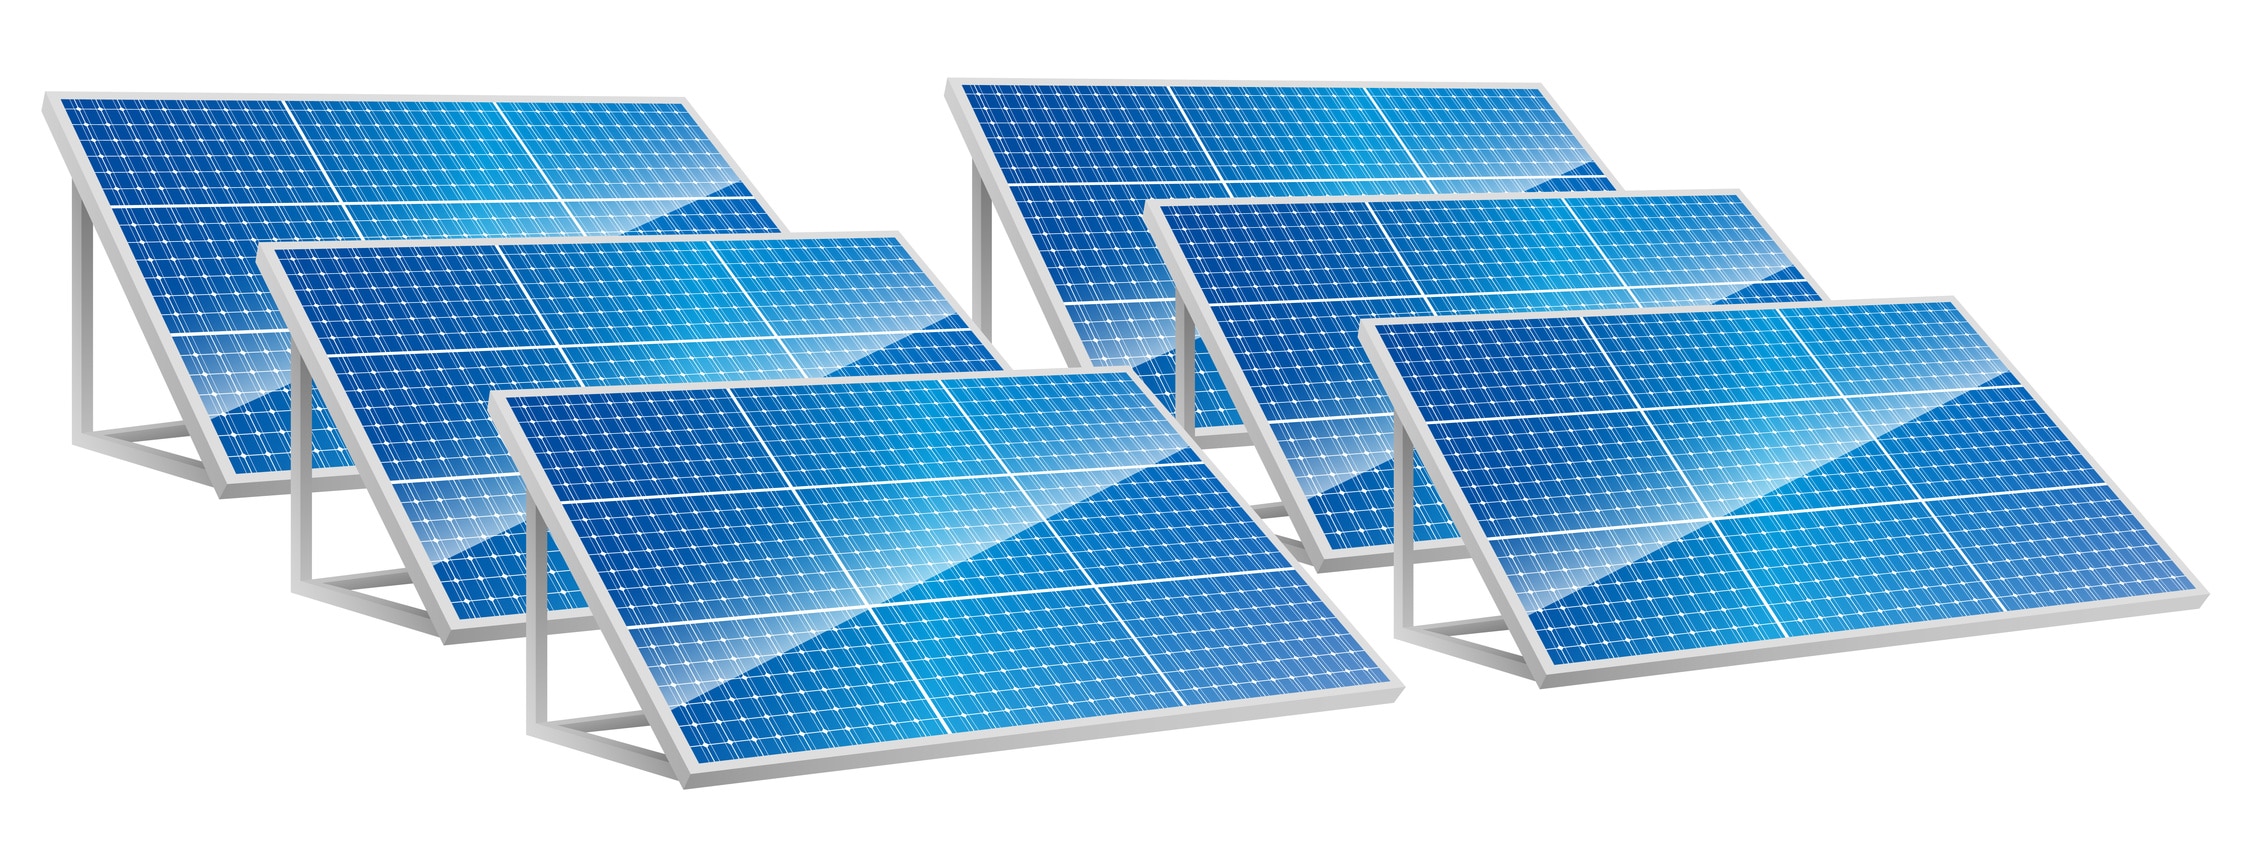 Solar Panels for Renewable Energy